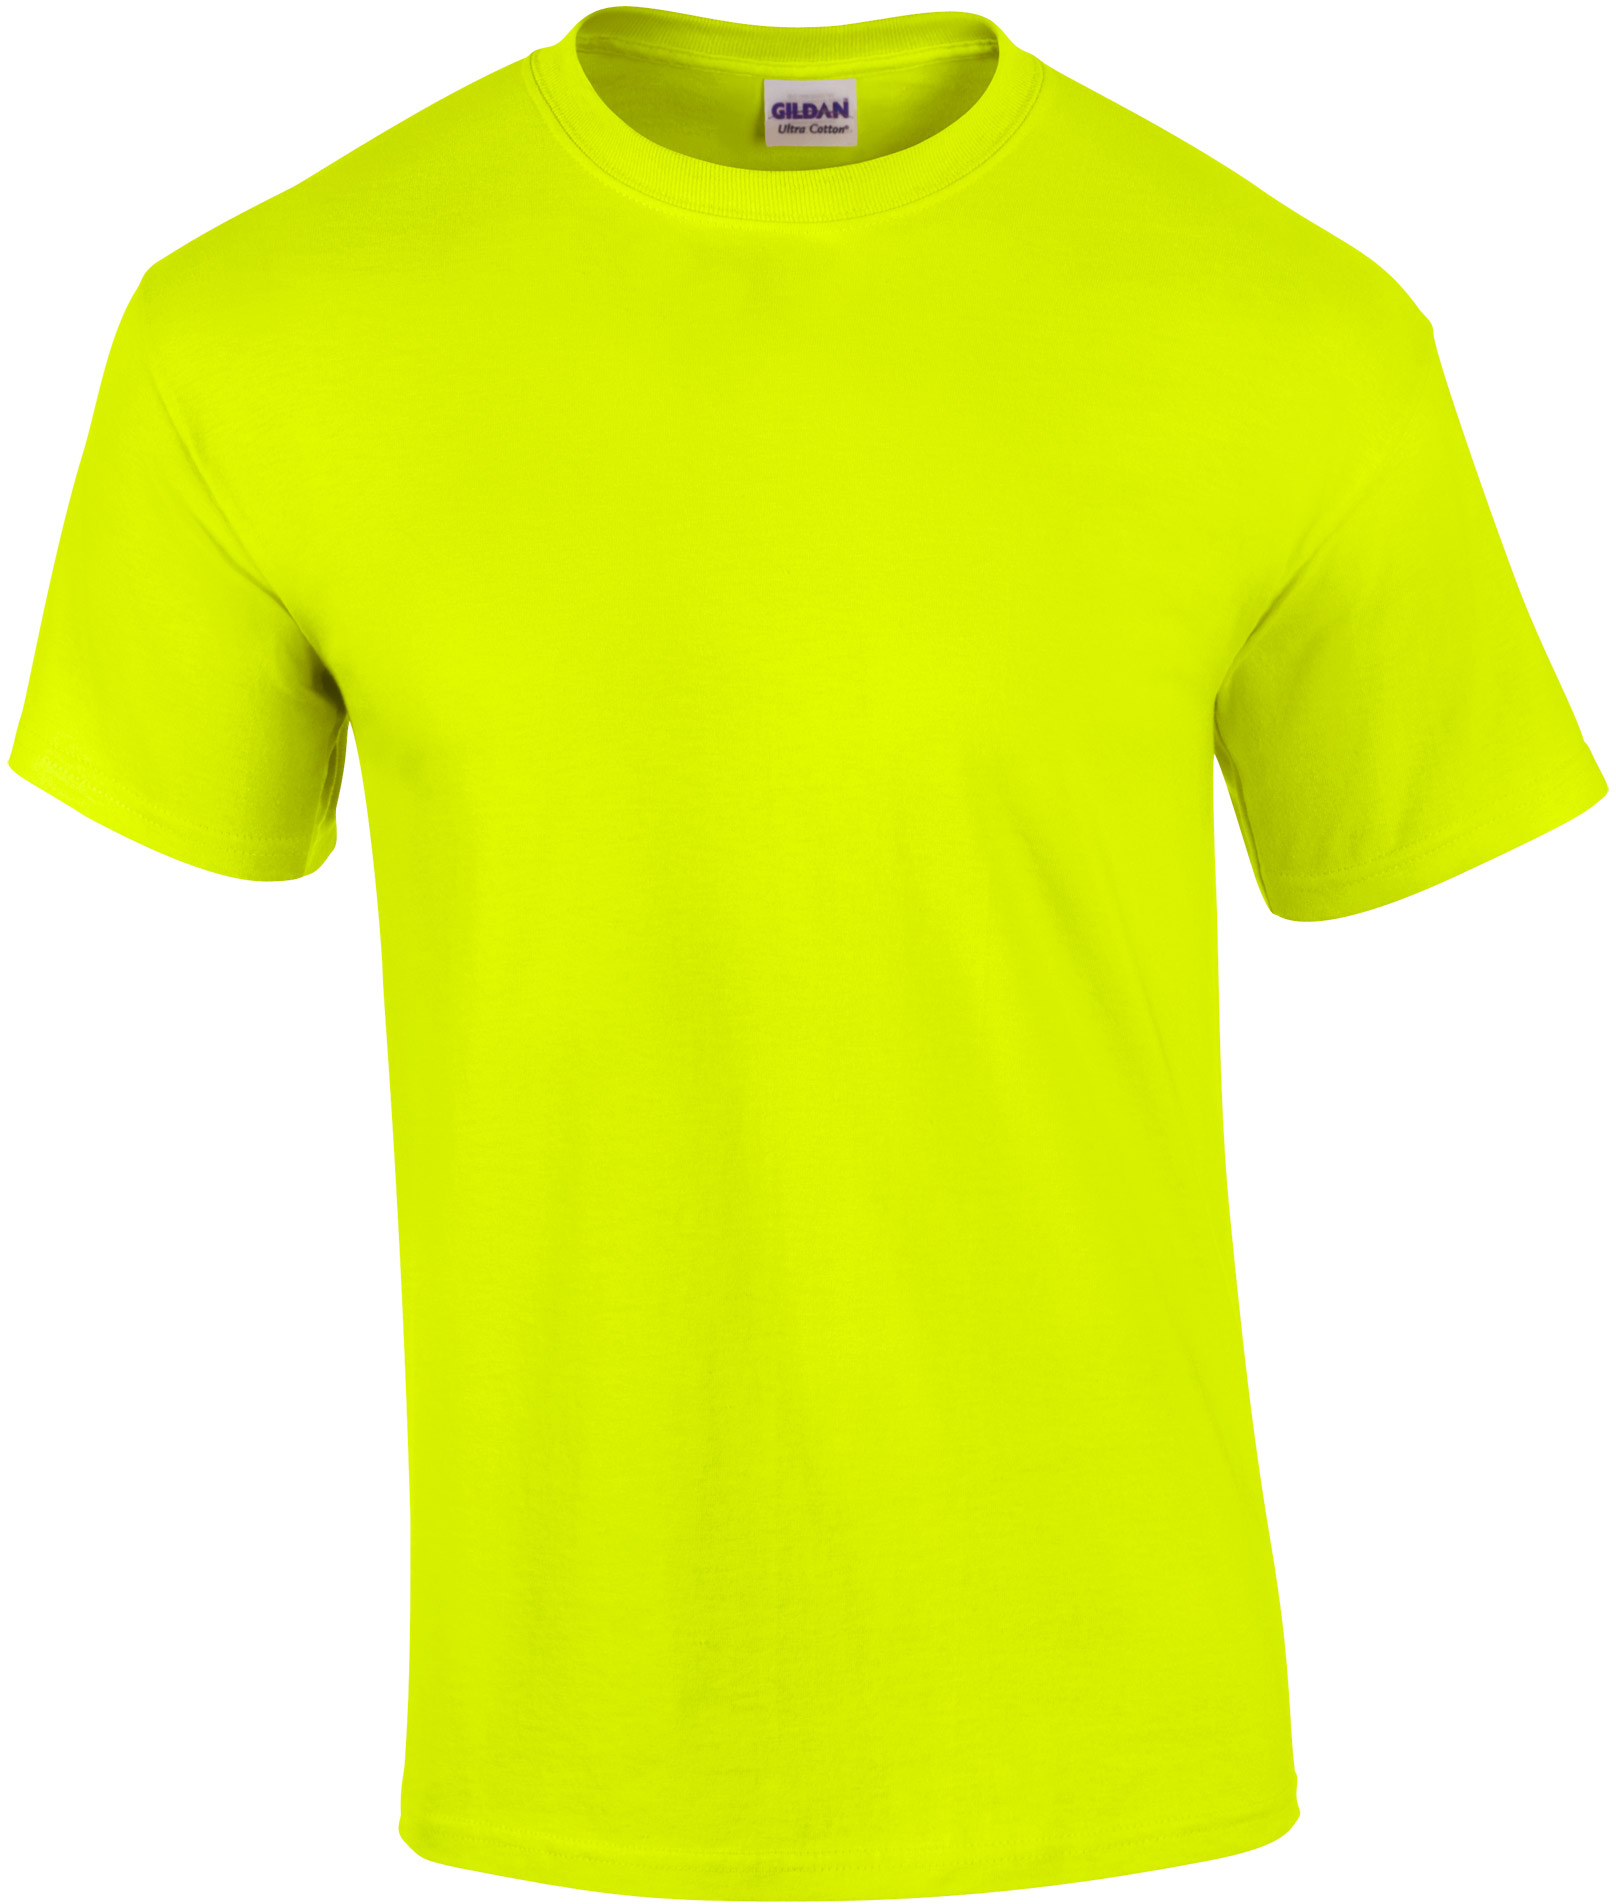 Tričko Gildan Ultra - Neonová žlutá XL